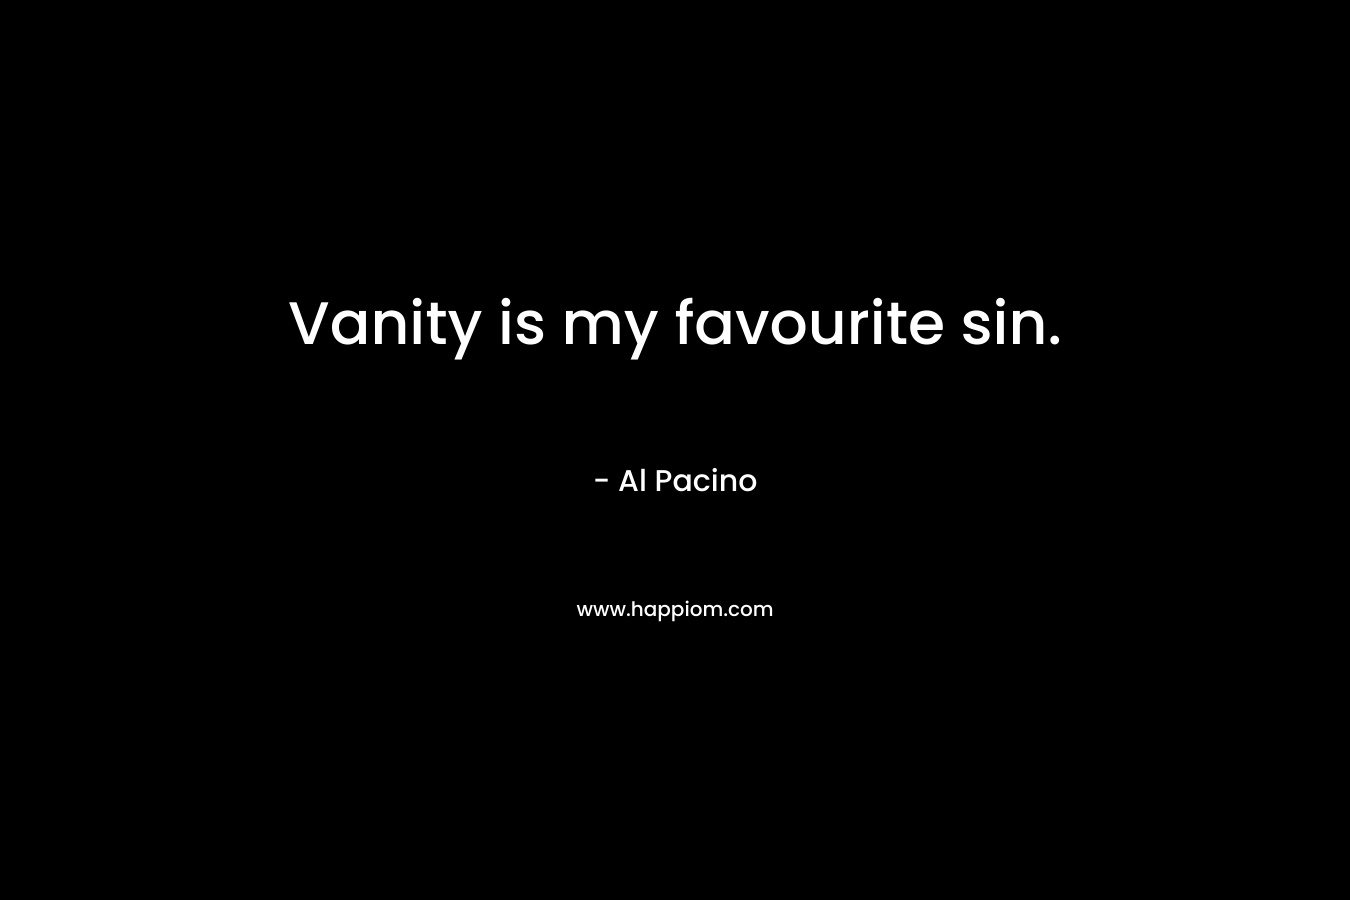 Vanity is my favourite sin.